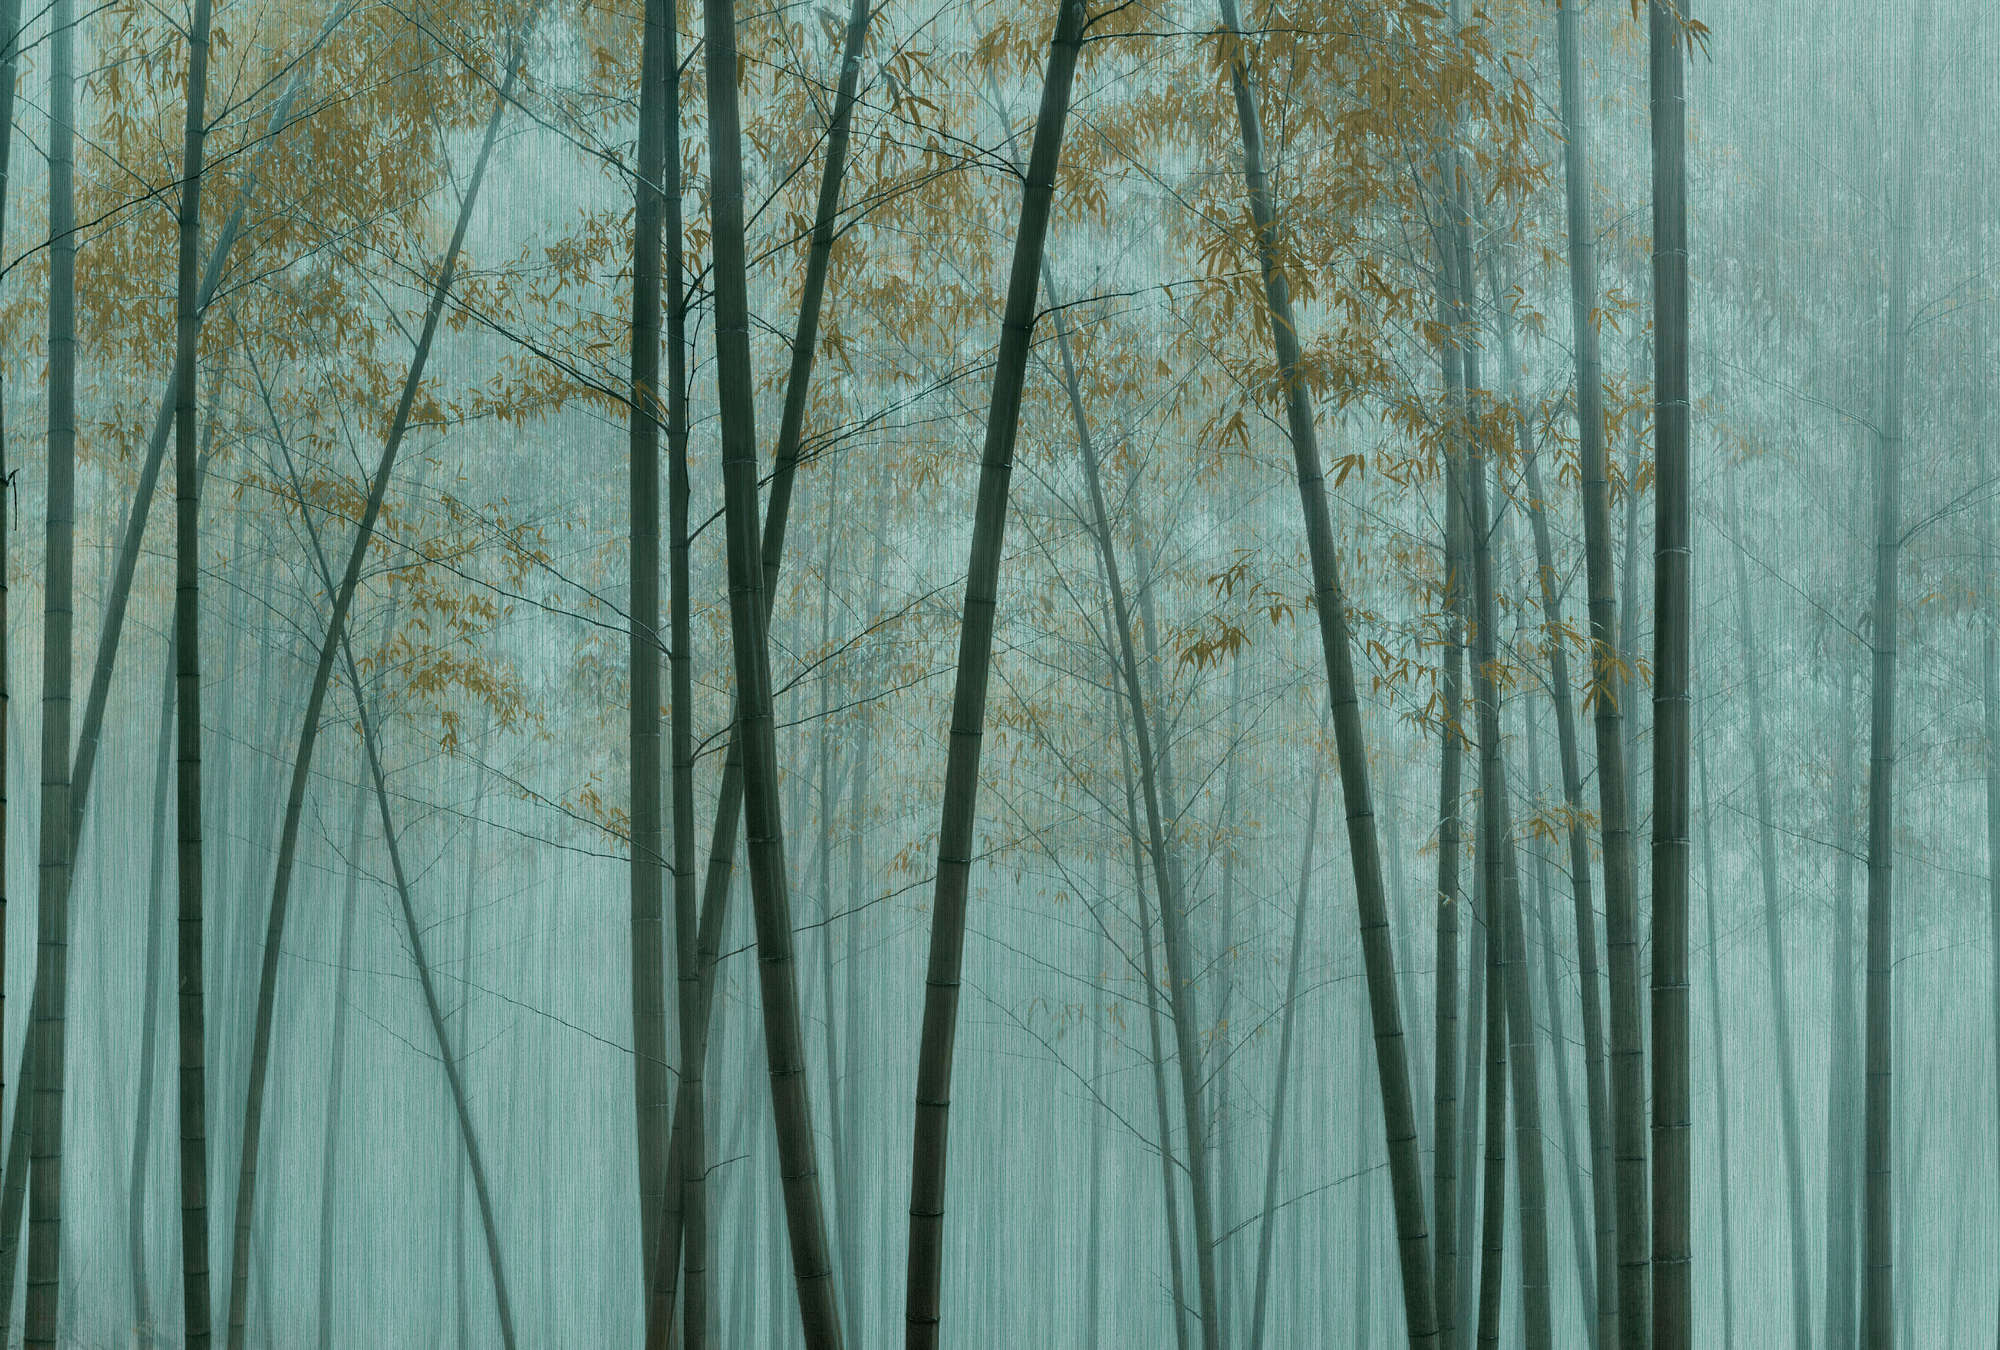             En el bambú 3 - Asia foto wallpaper bosque de bambú
        